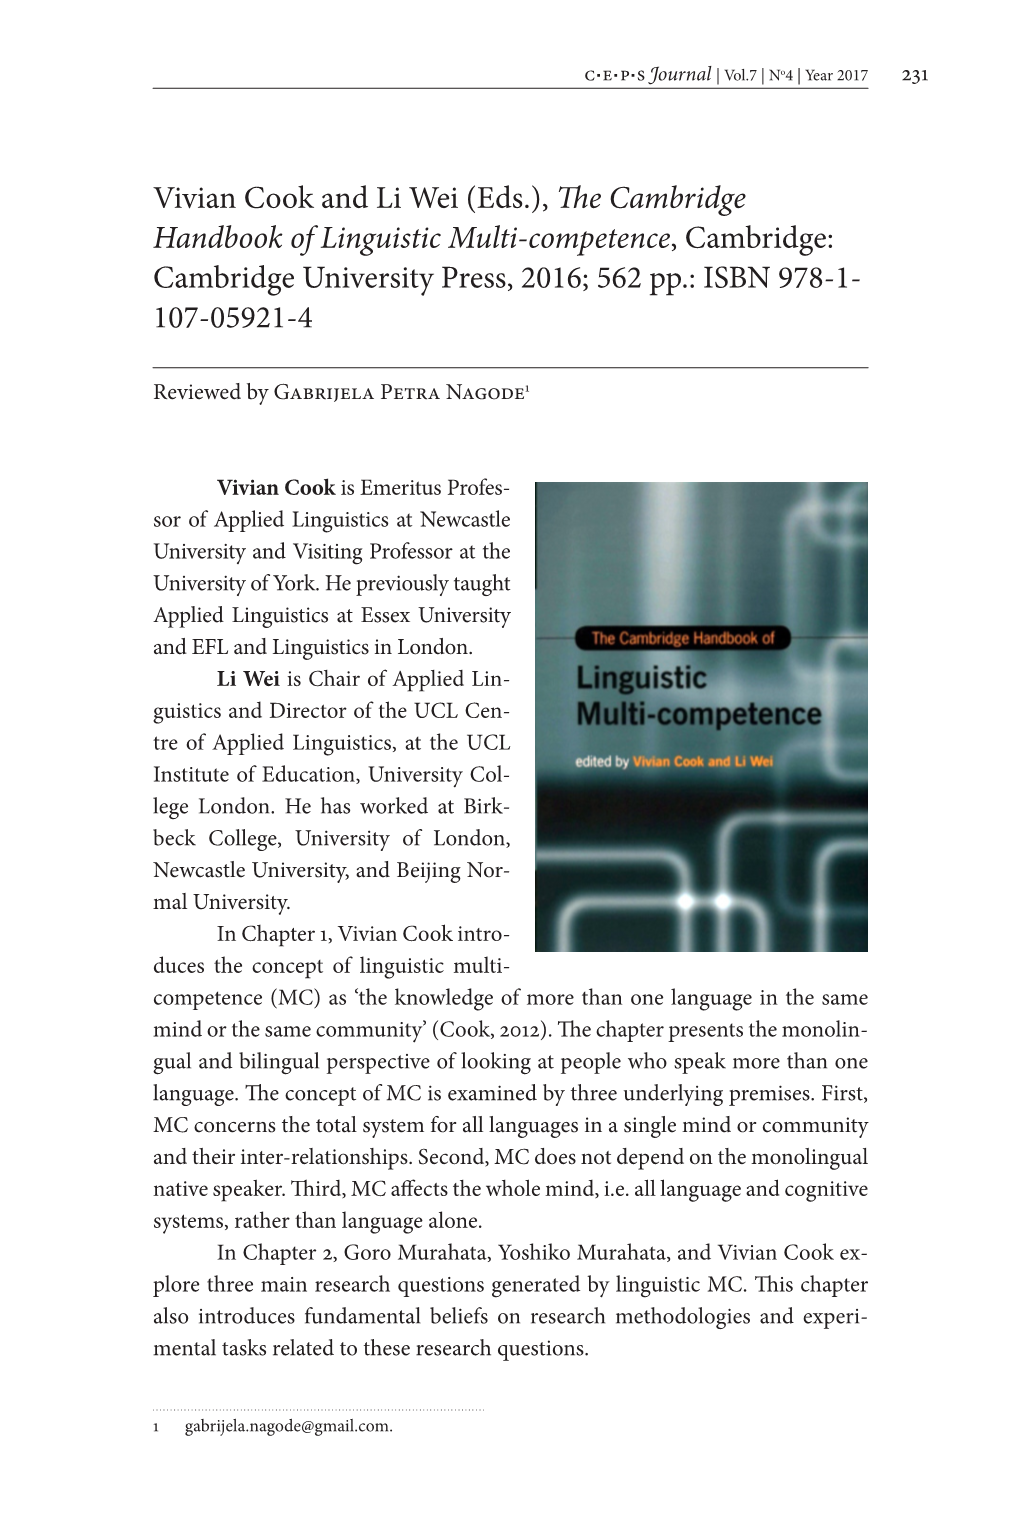 Vivian Cook and Li Wei (Eds.), the Cambridge Handbook of Linguistic Multi-Competence, Cambridge: Cambridge University Press, 2016; 562 Pp.: ISBN 978-1- 107-05921-4